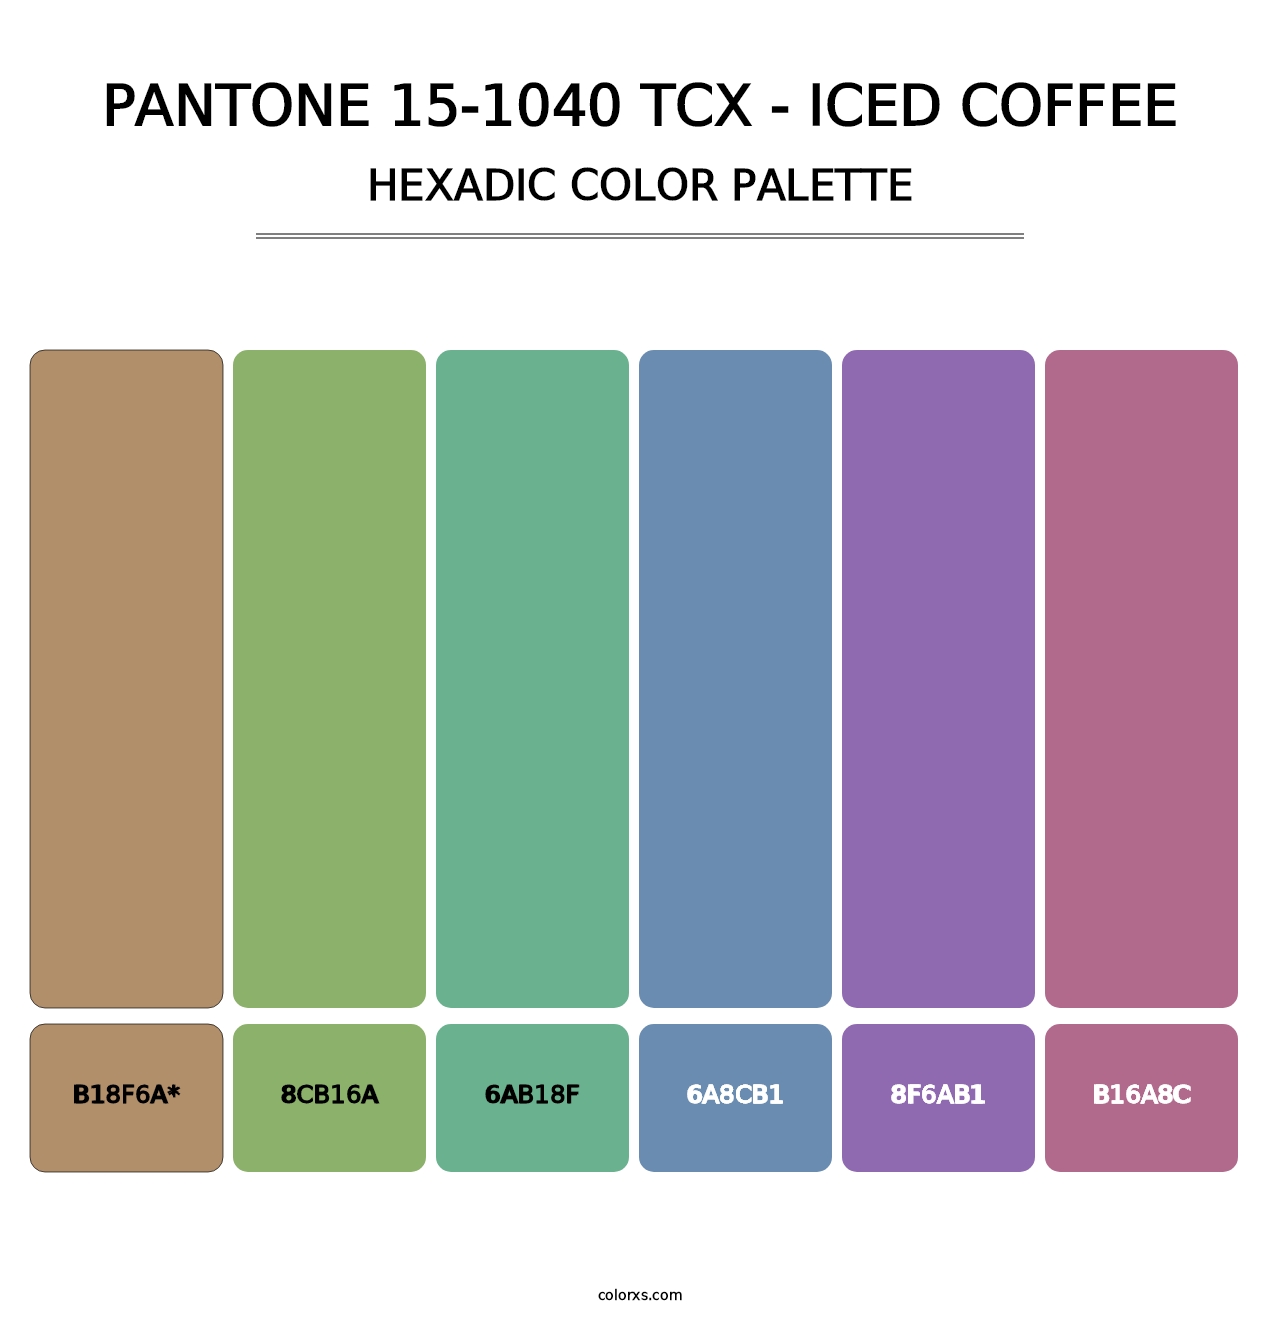 PANTONE 15-1040 TCX - Iced Coffee - Hexadic Color Palette